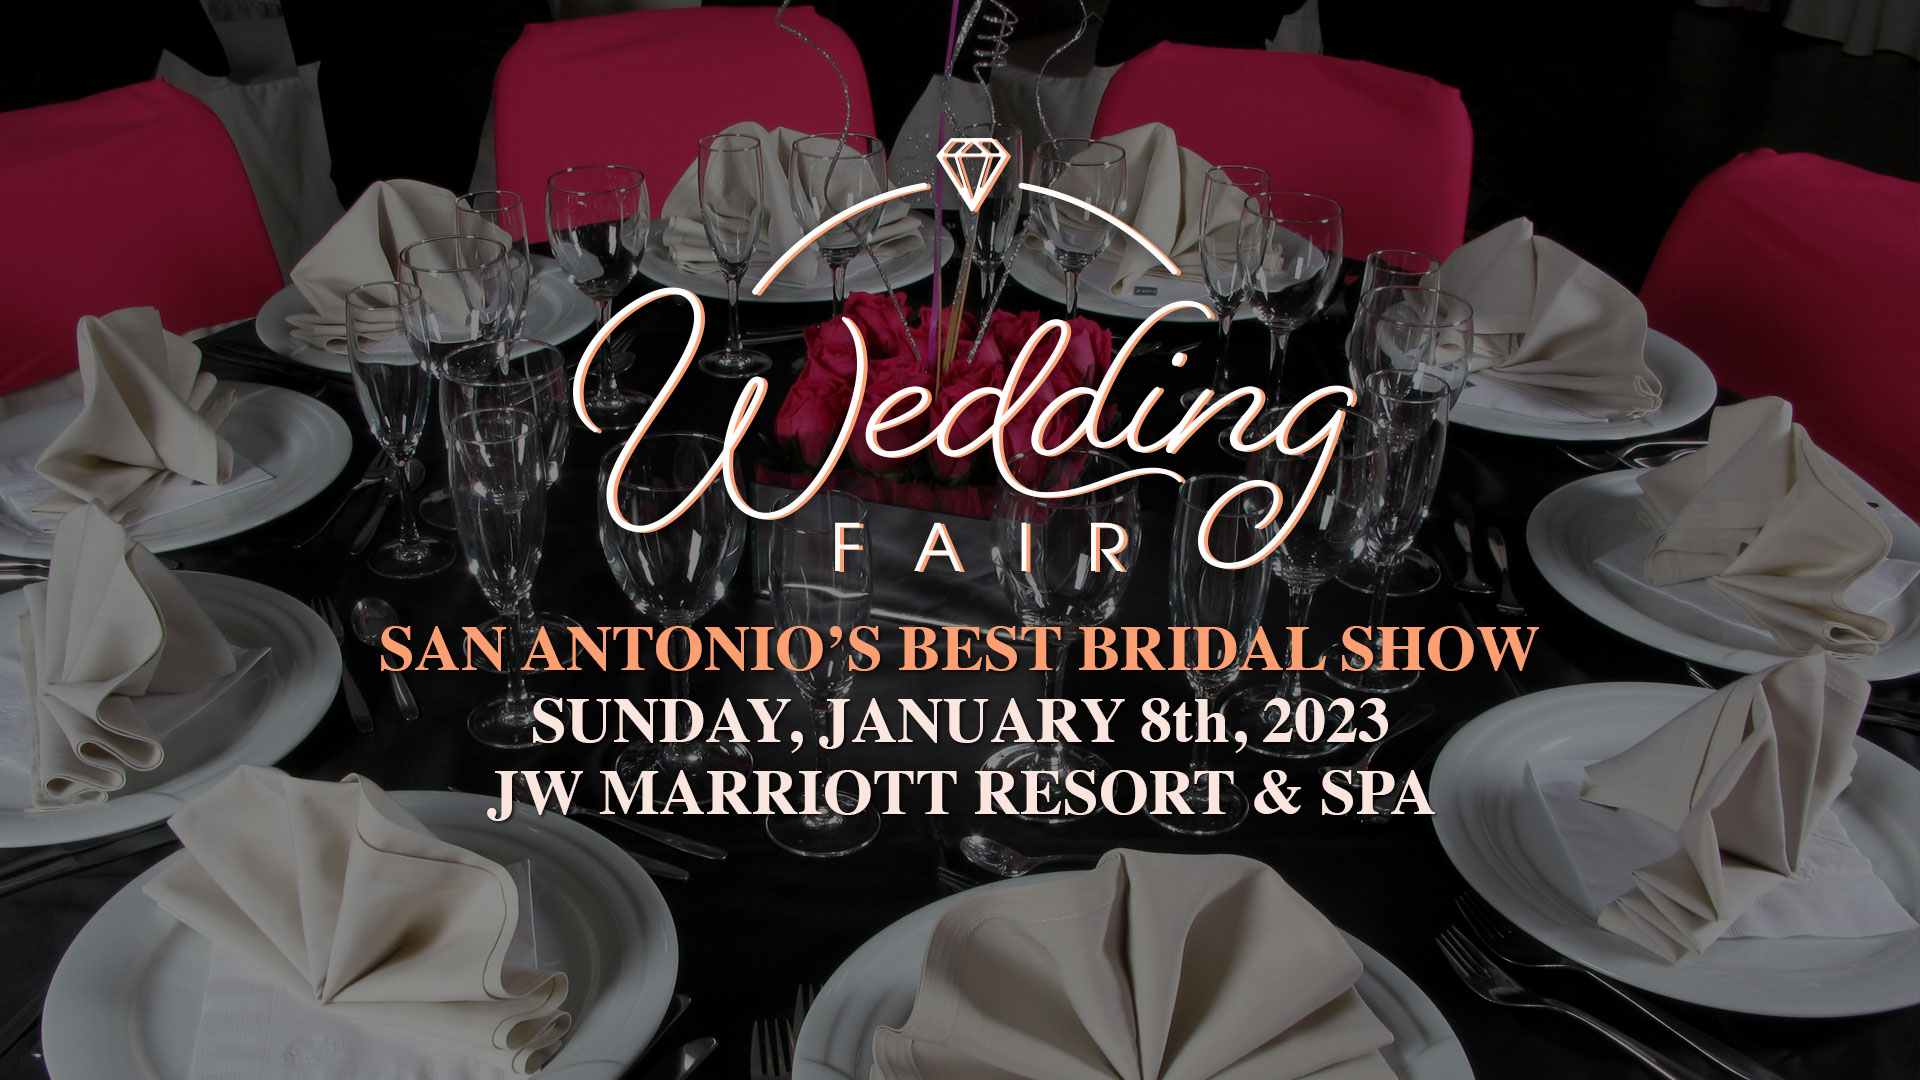 Wedding Fair Show - January 8, 2023 - San Antonio, Texas